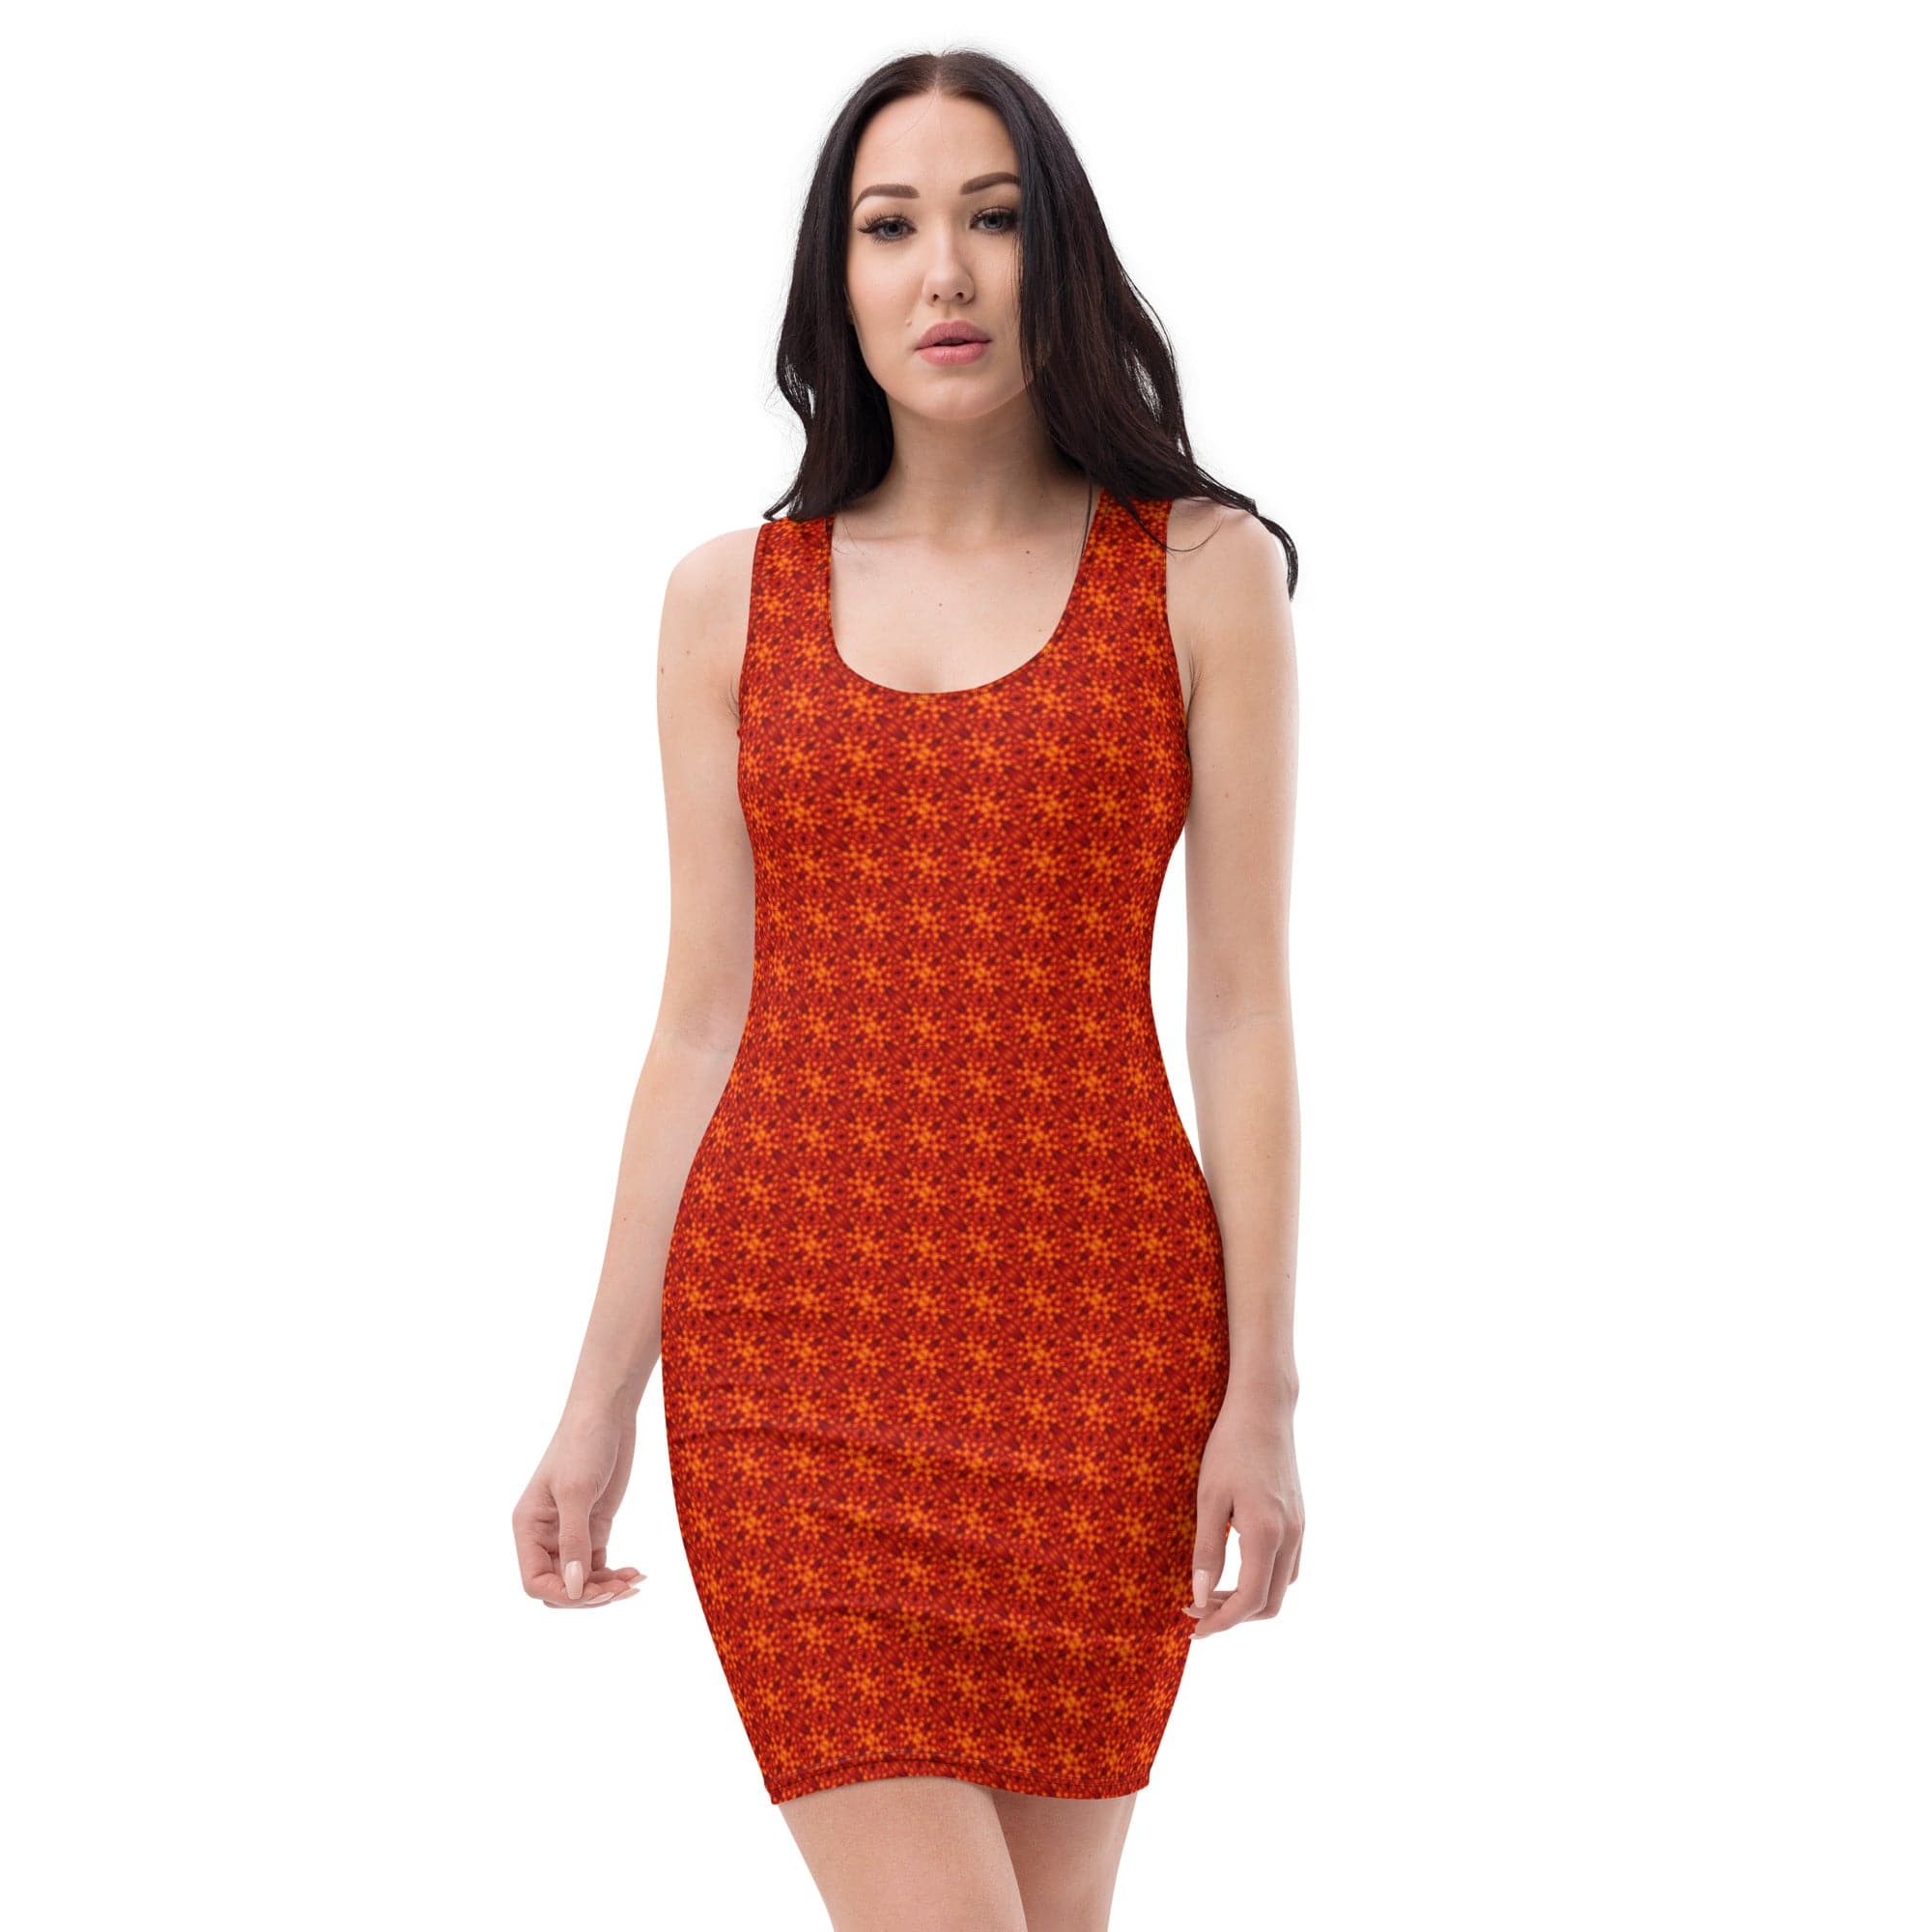 Passionate Orange figure hugging Sublimation Cut & Sew Dress, by Sensus Studio Design